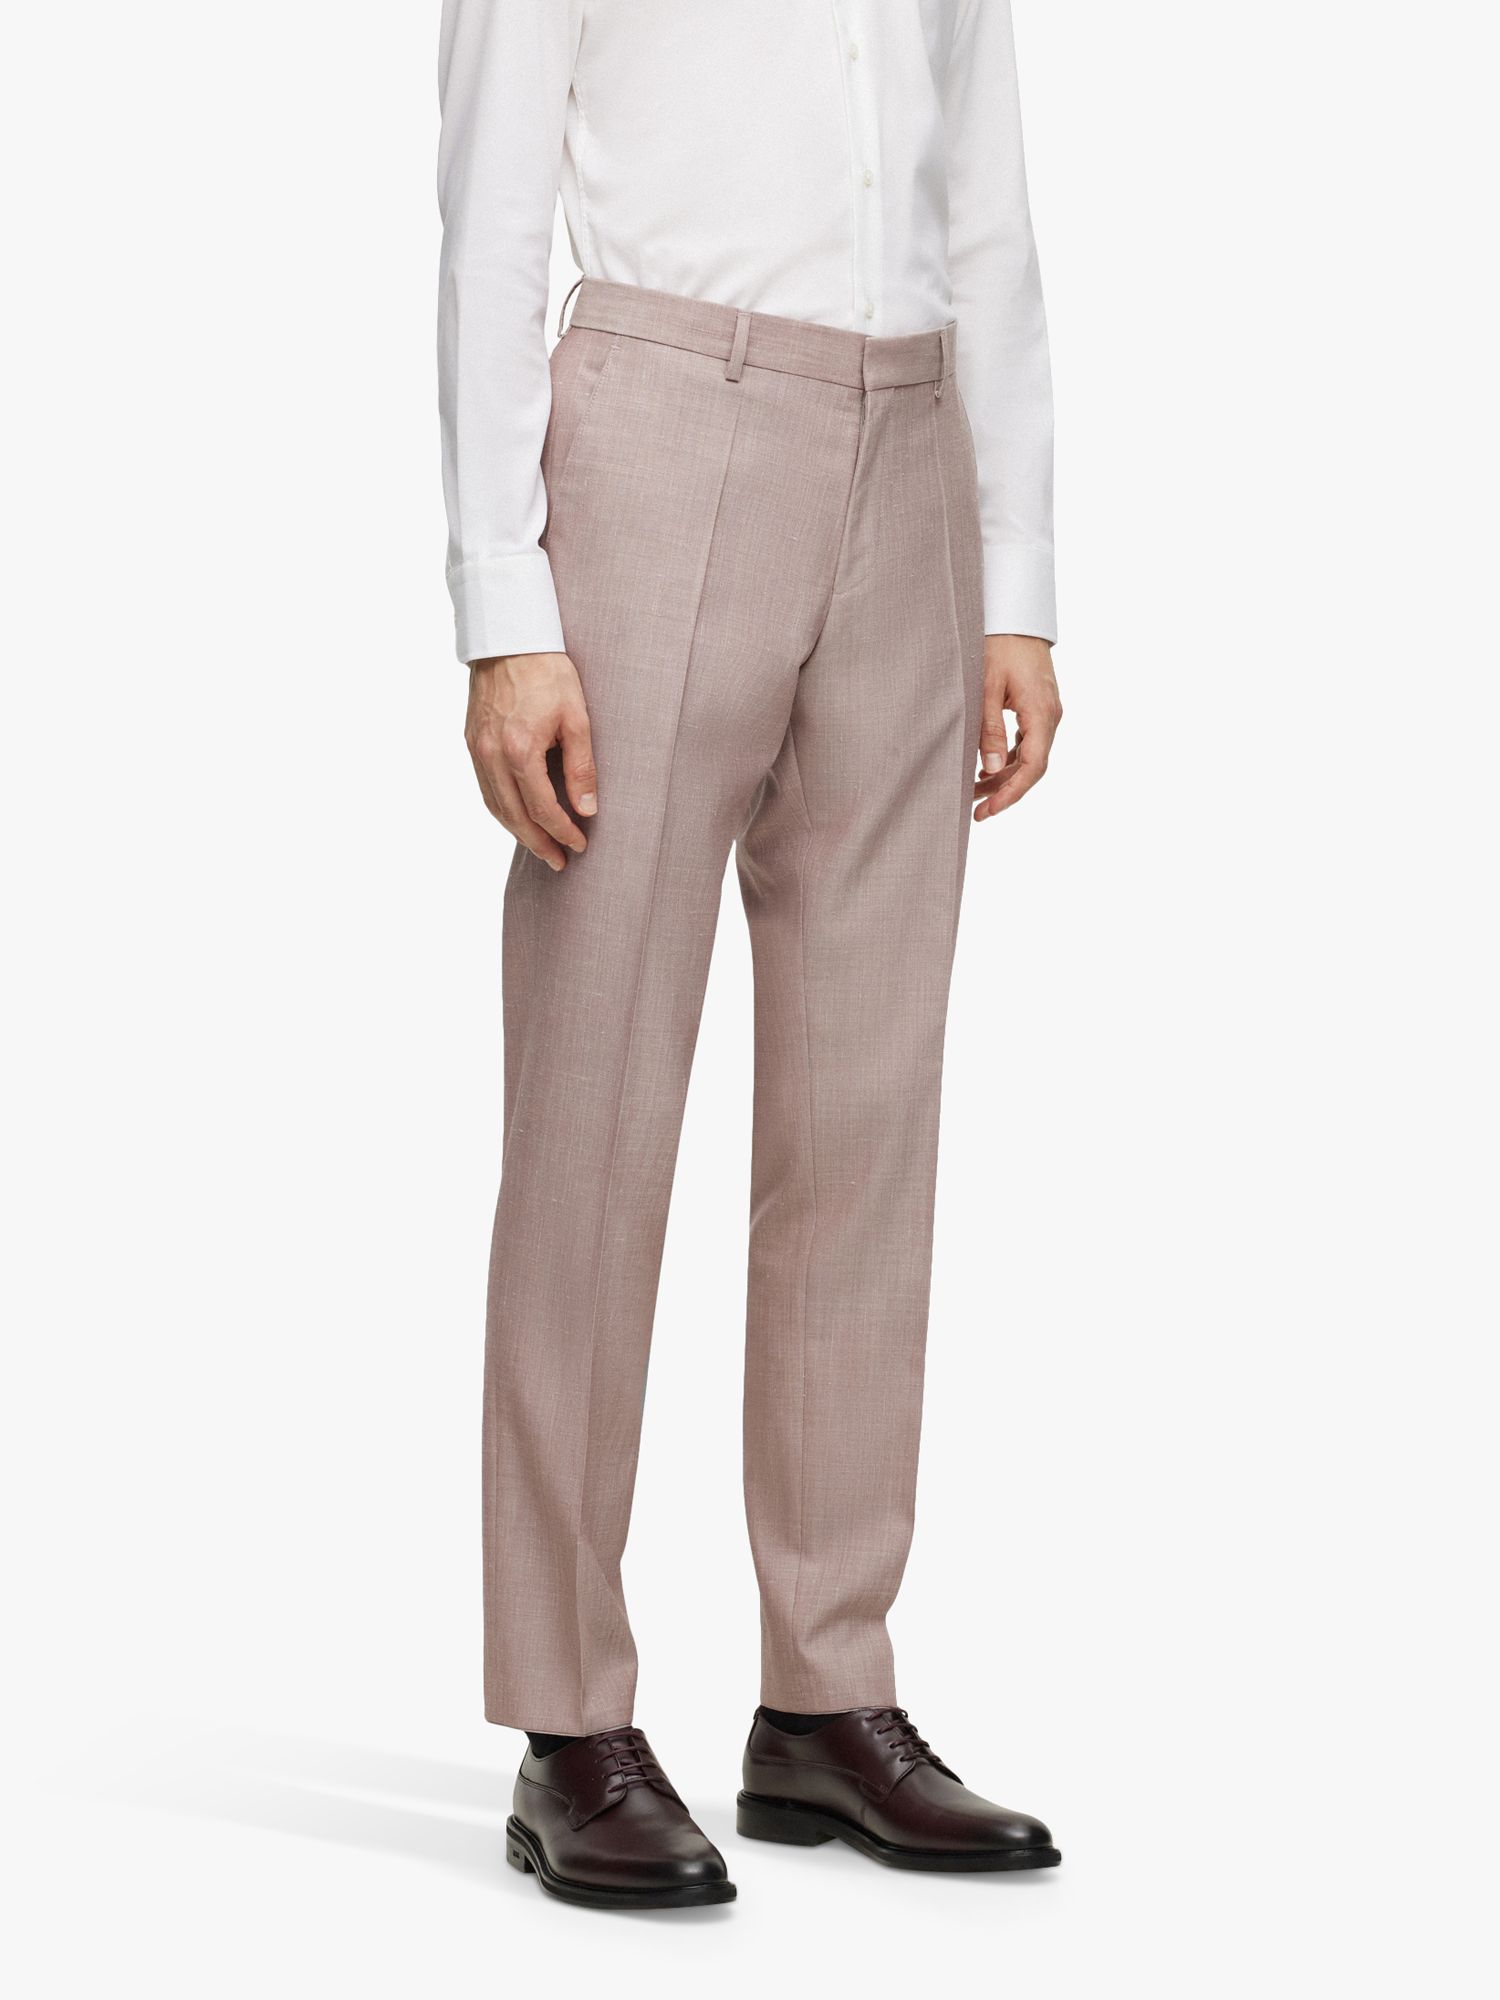 BOSS H-Genius Slim Fit Suit Trousers, Open Pink, 38R